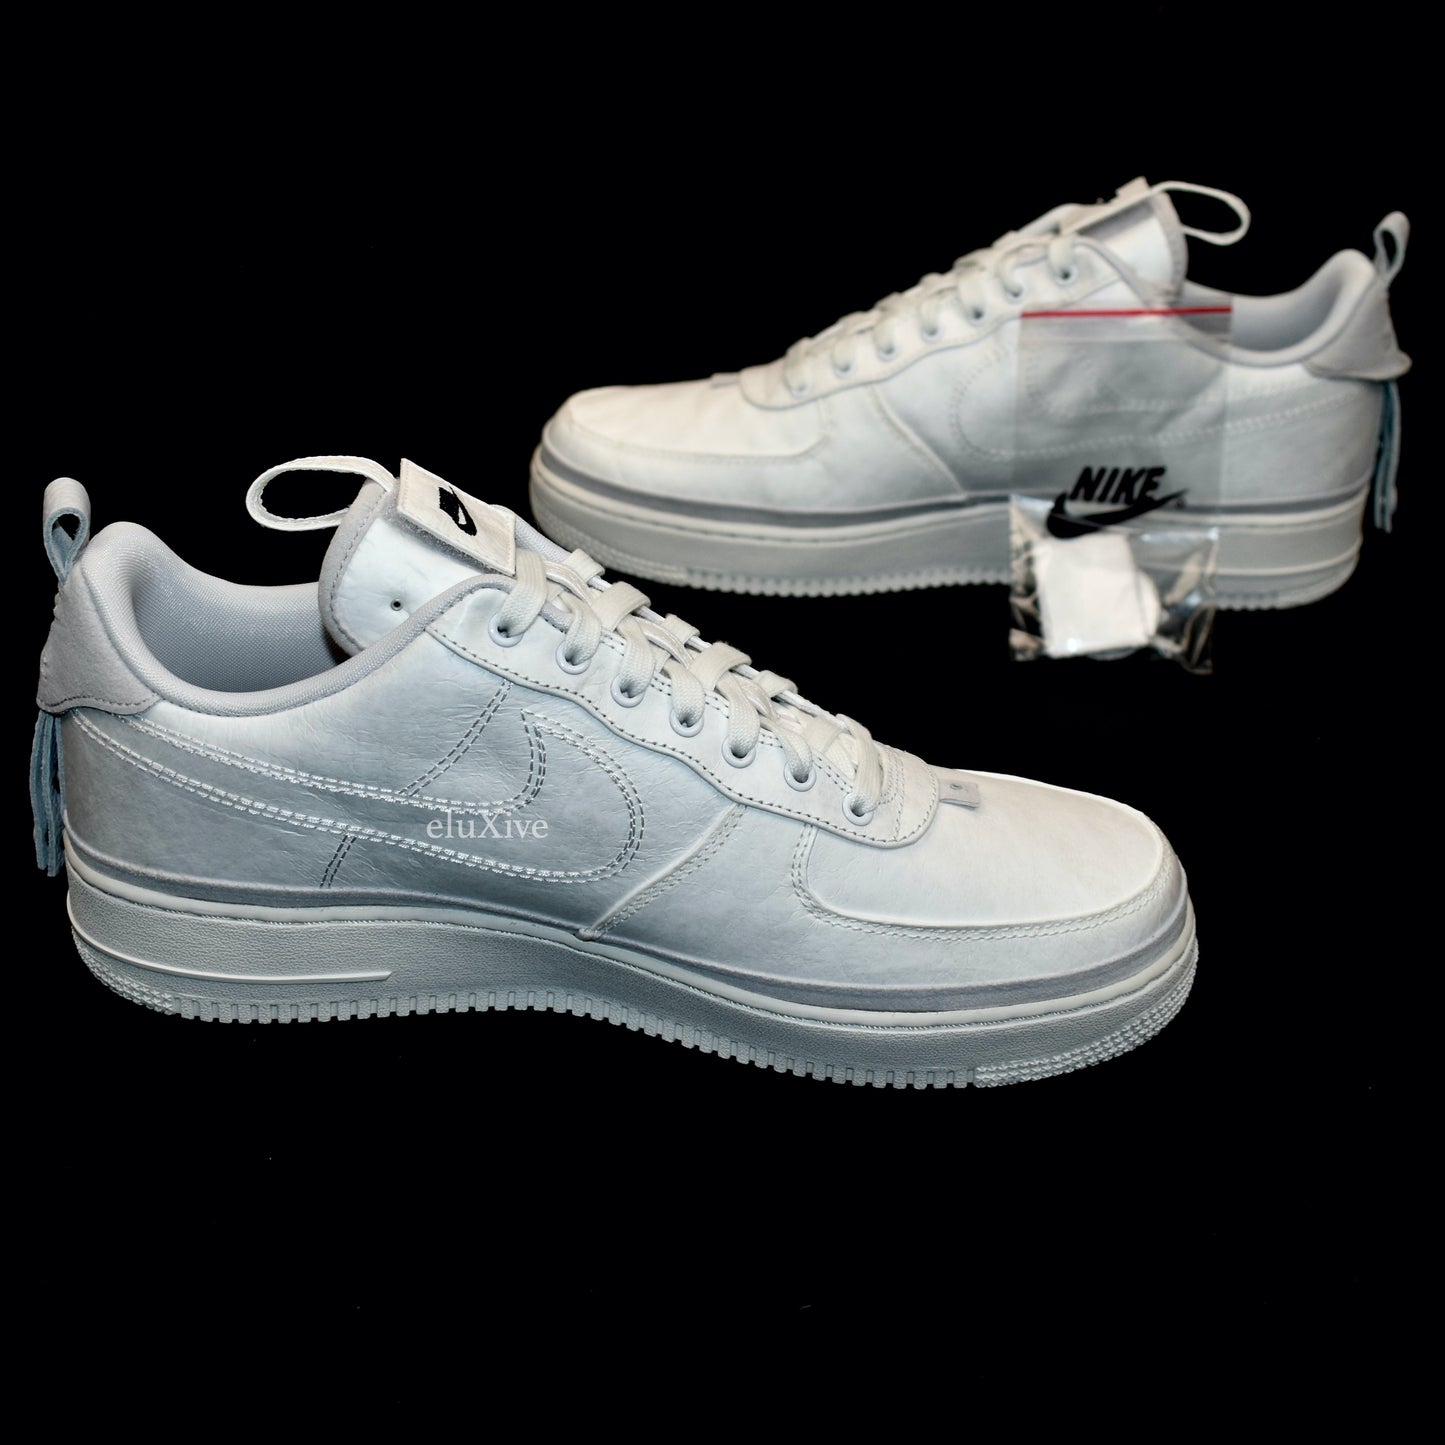 Nike Air Force 1 '07 White 10